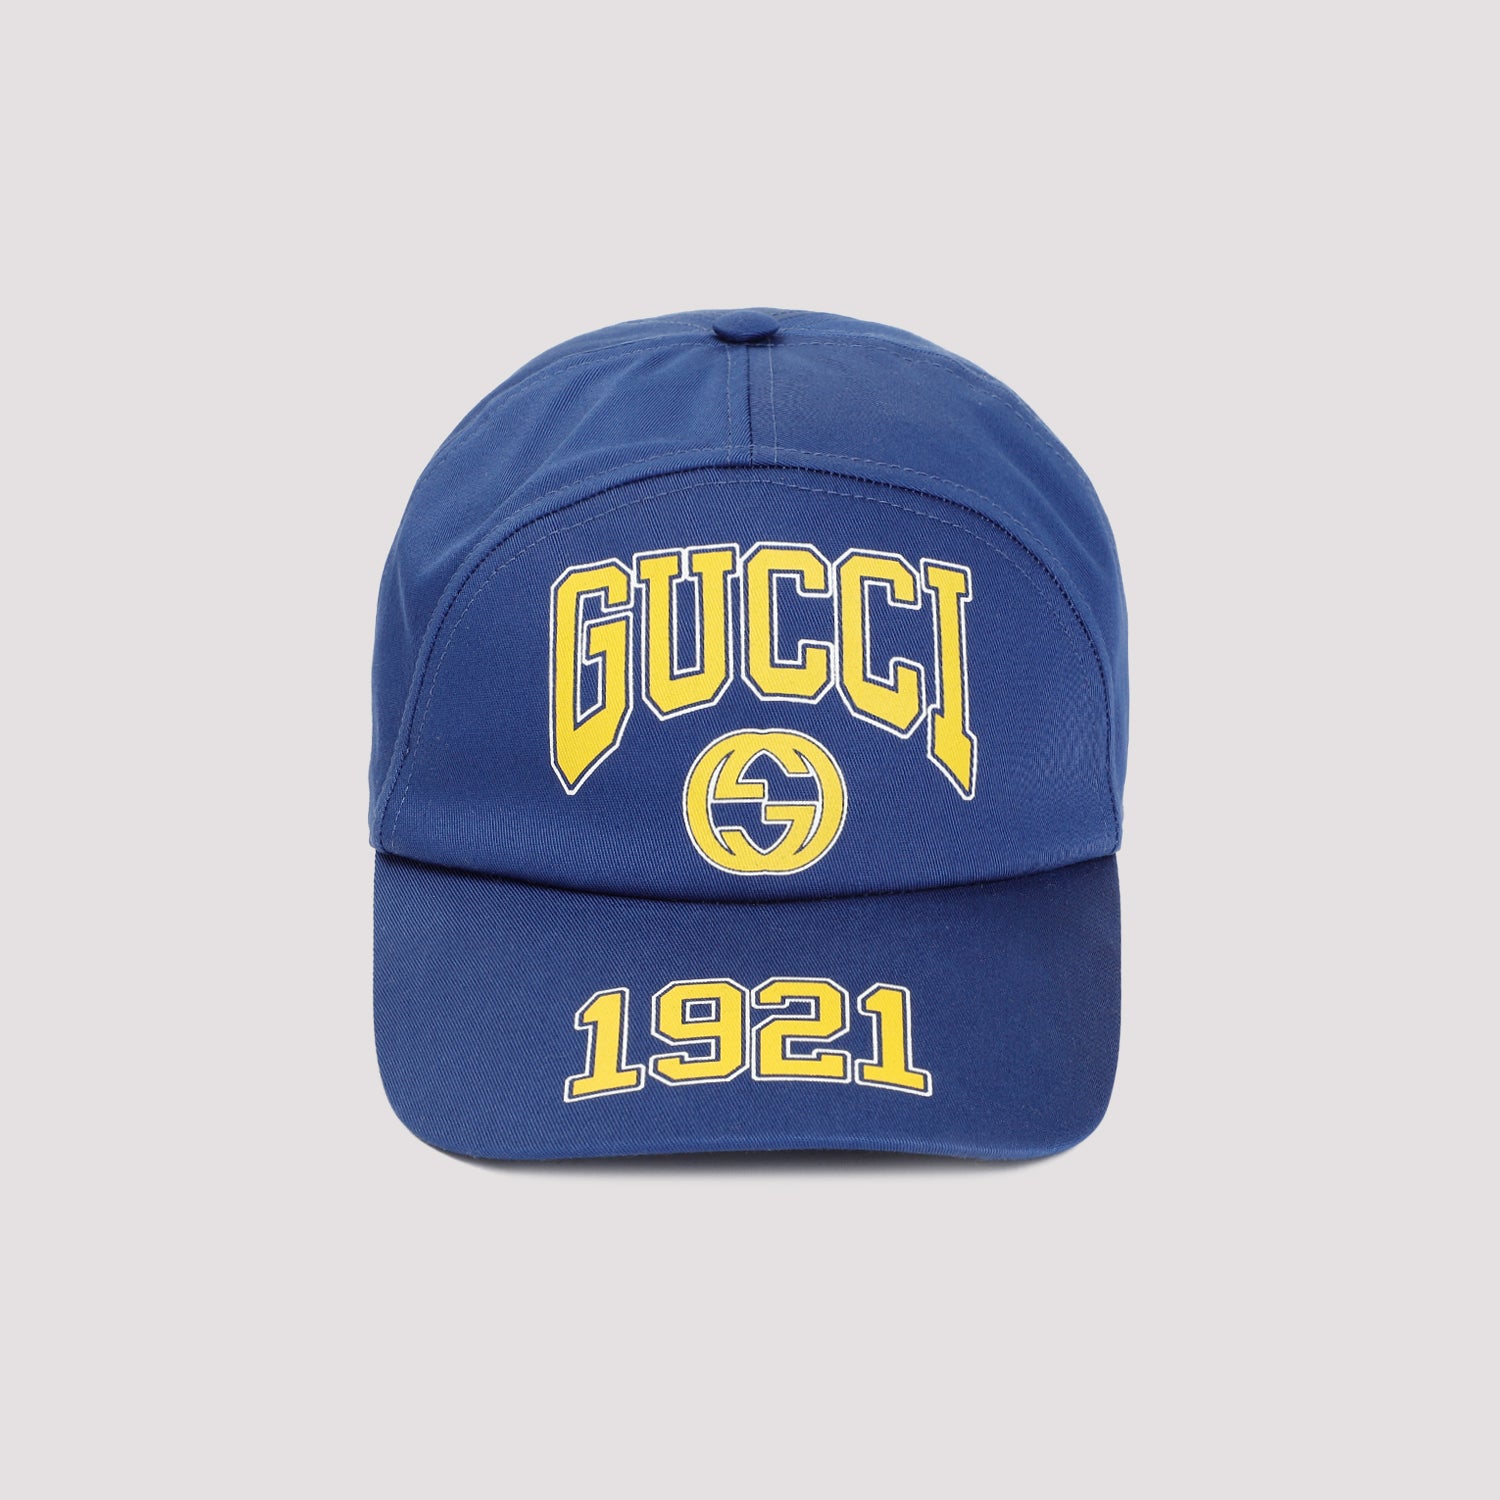 Gucci Hat In Blue